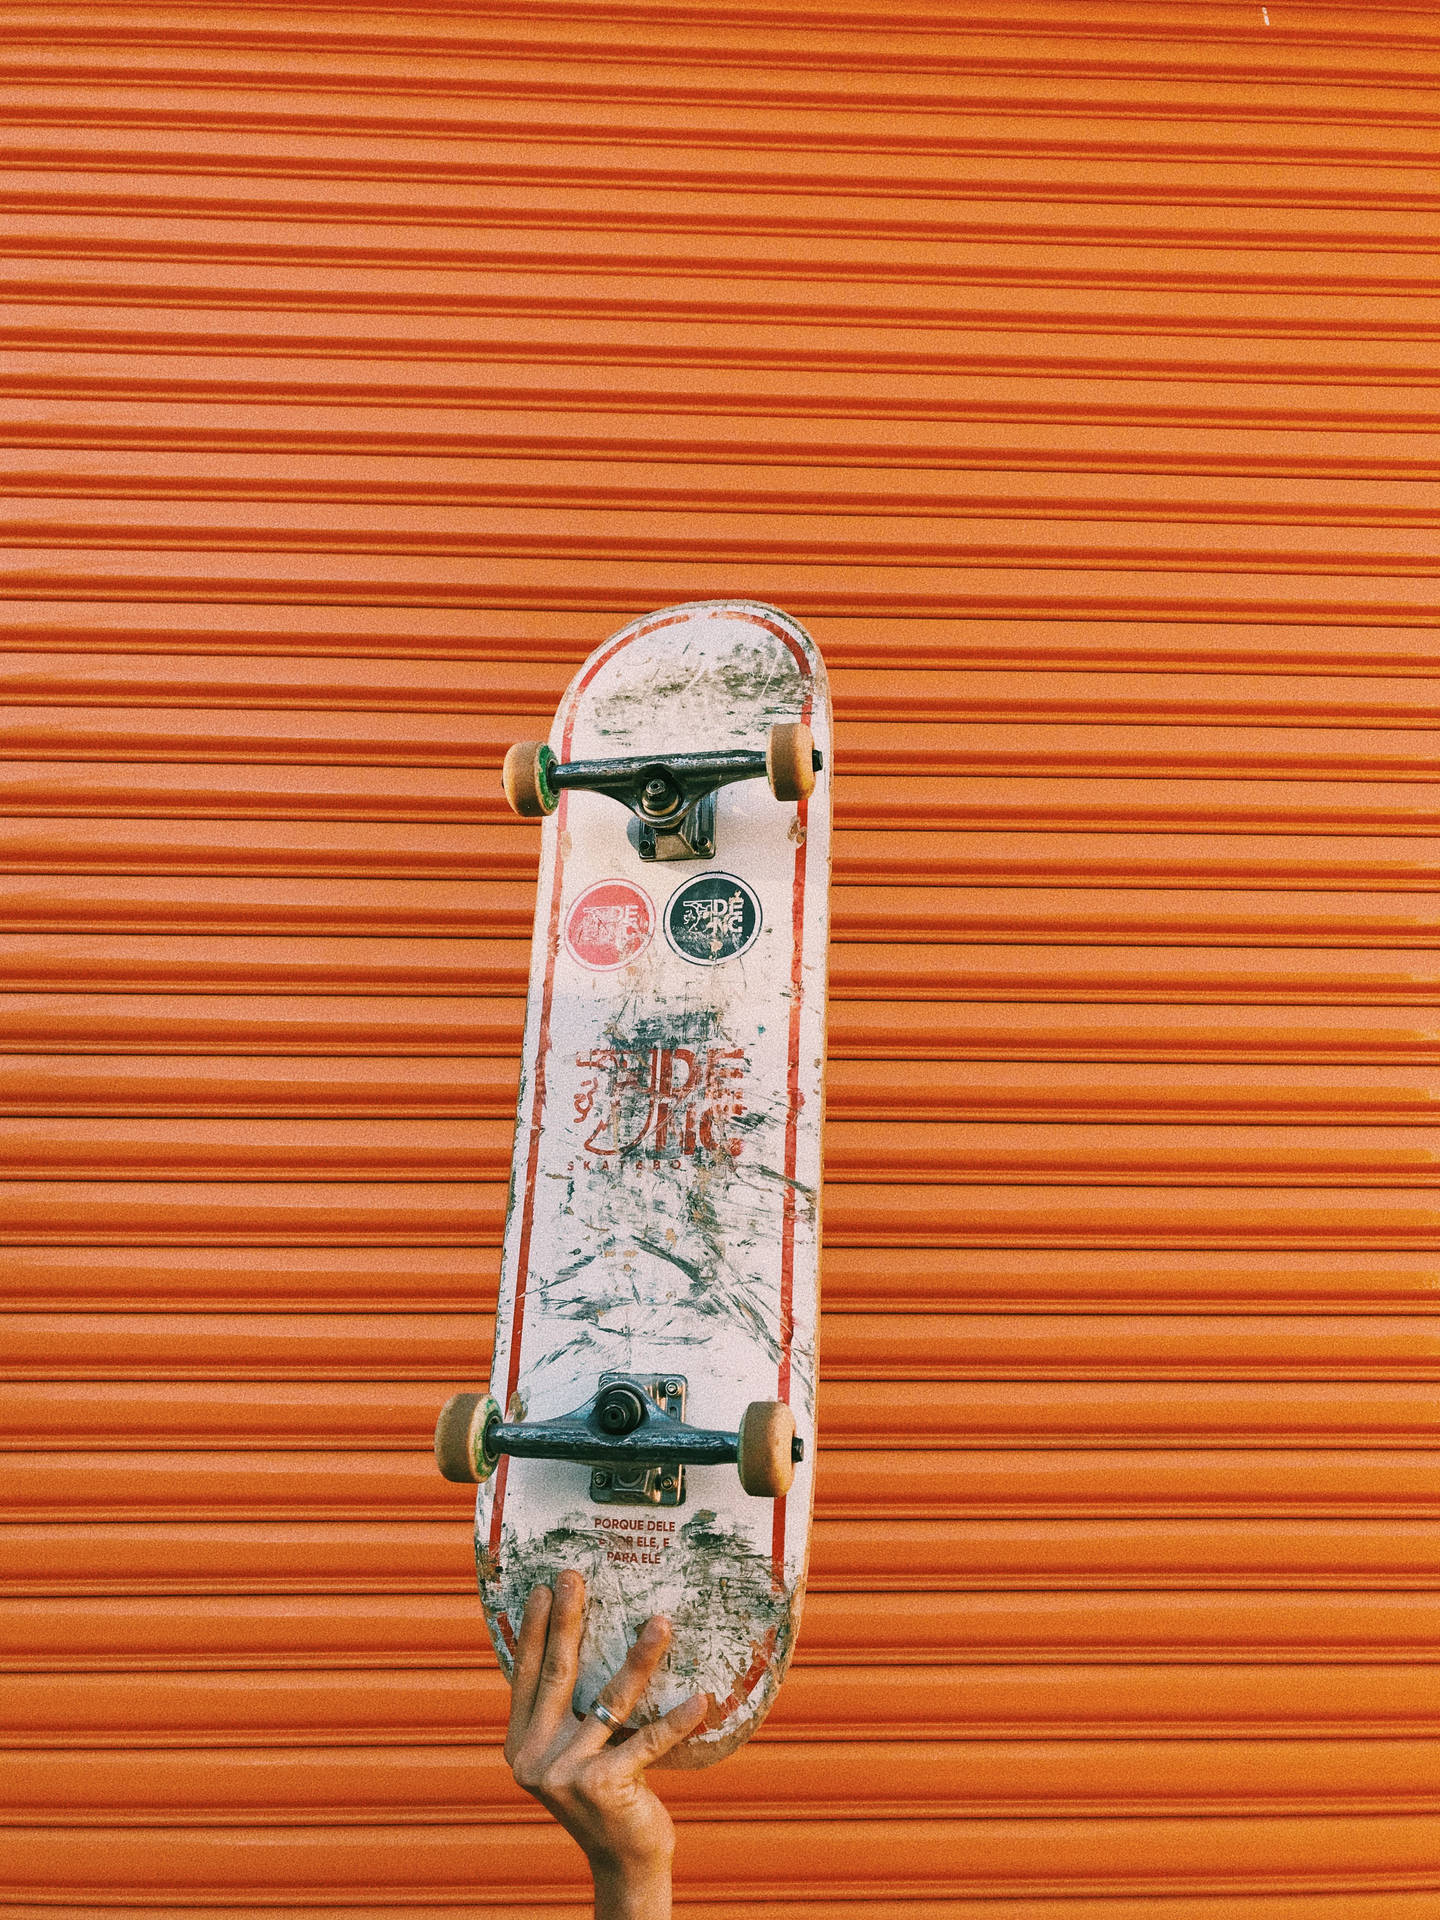 Skateboard In Orange Gate Background Background